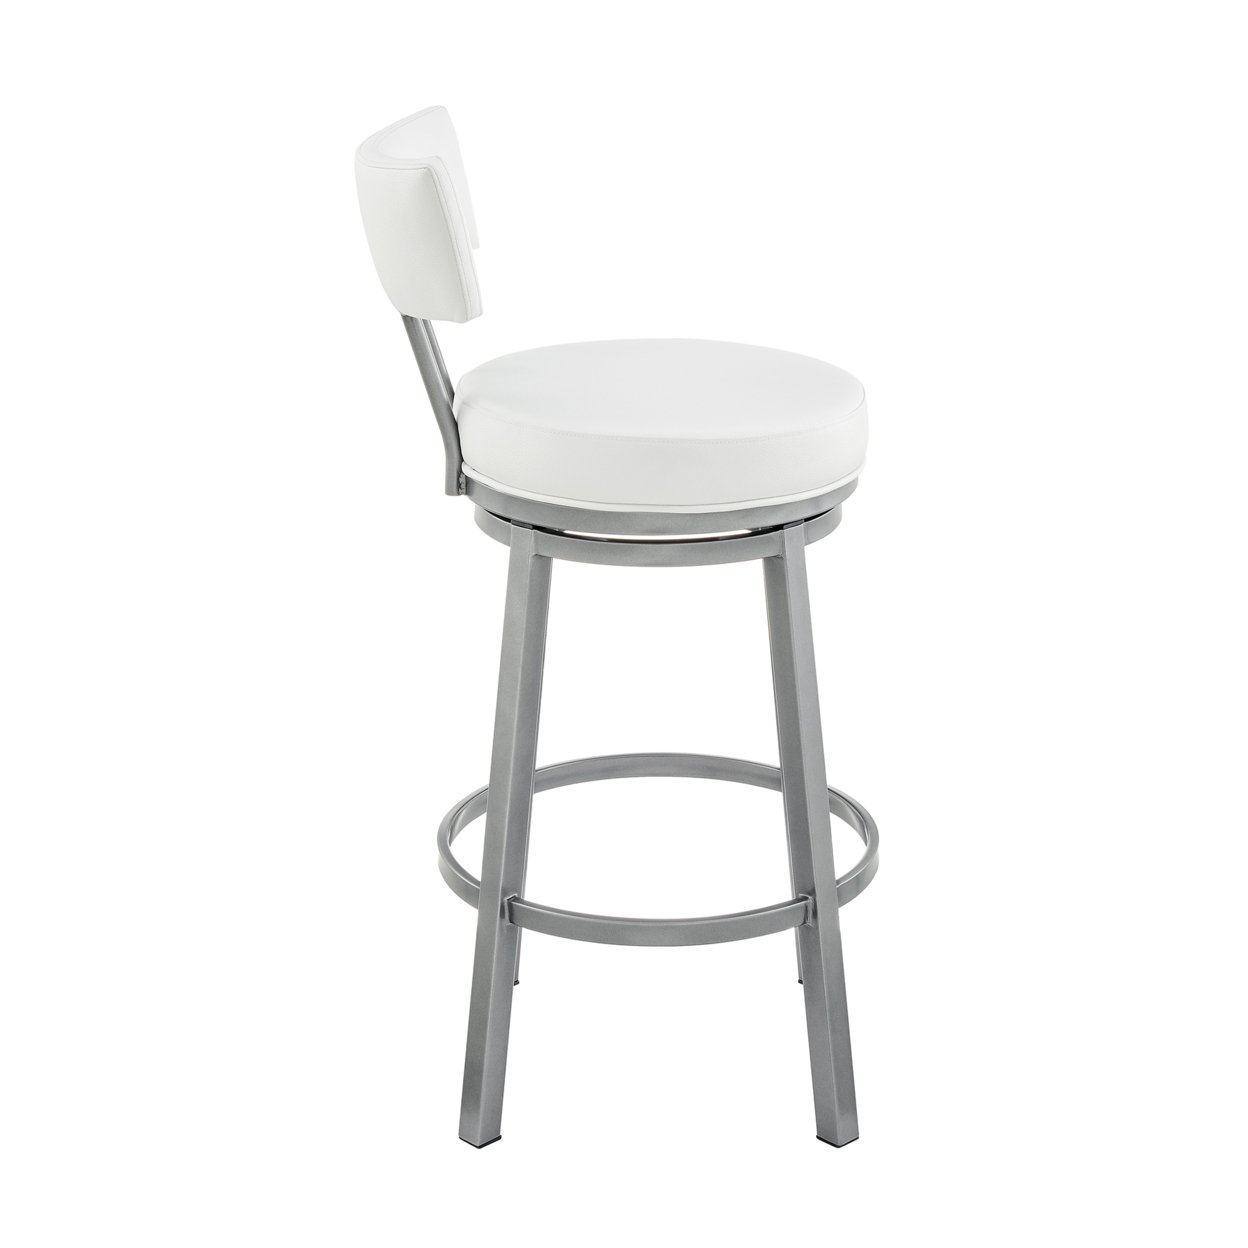 Eleanor 26 Inch Swivel Counter Stool Chair, Round White Faux Leather Seat- Saltoro Sherpi